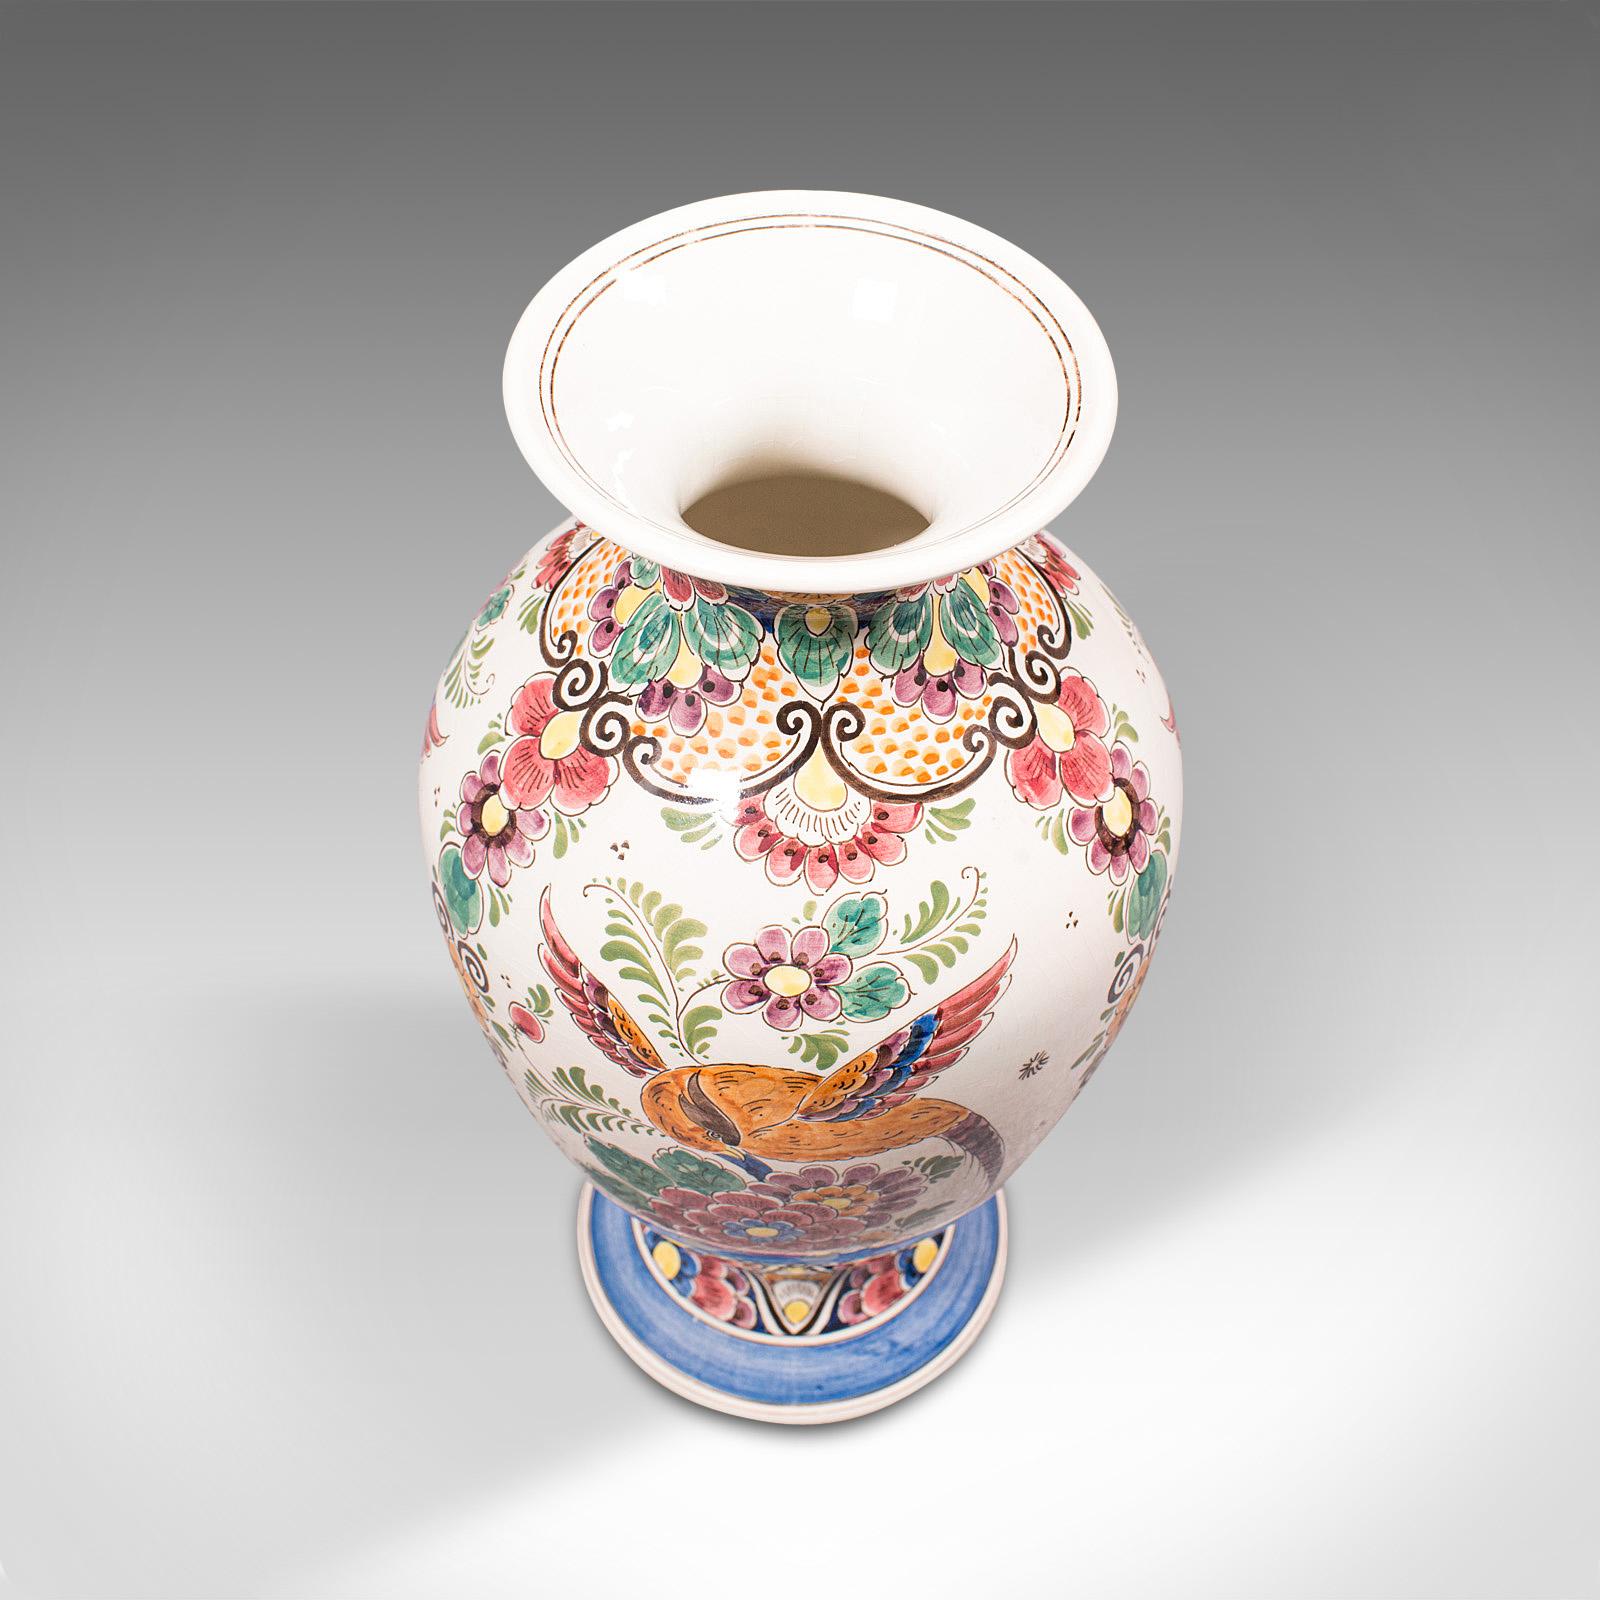 Vintage Polychromatic Vase, Dutch, Delft, Ceramic, Ornament, Mid 20th.C, C.1960 For Sale 4